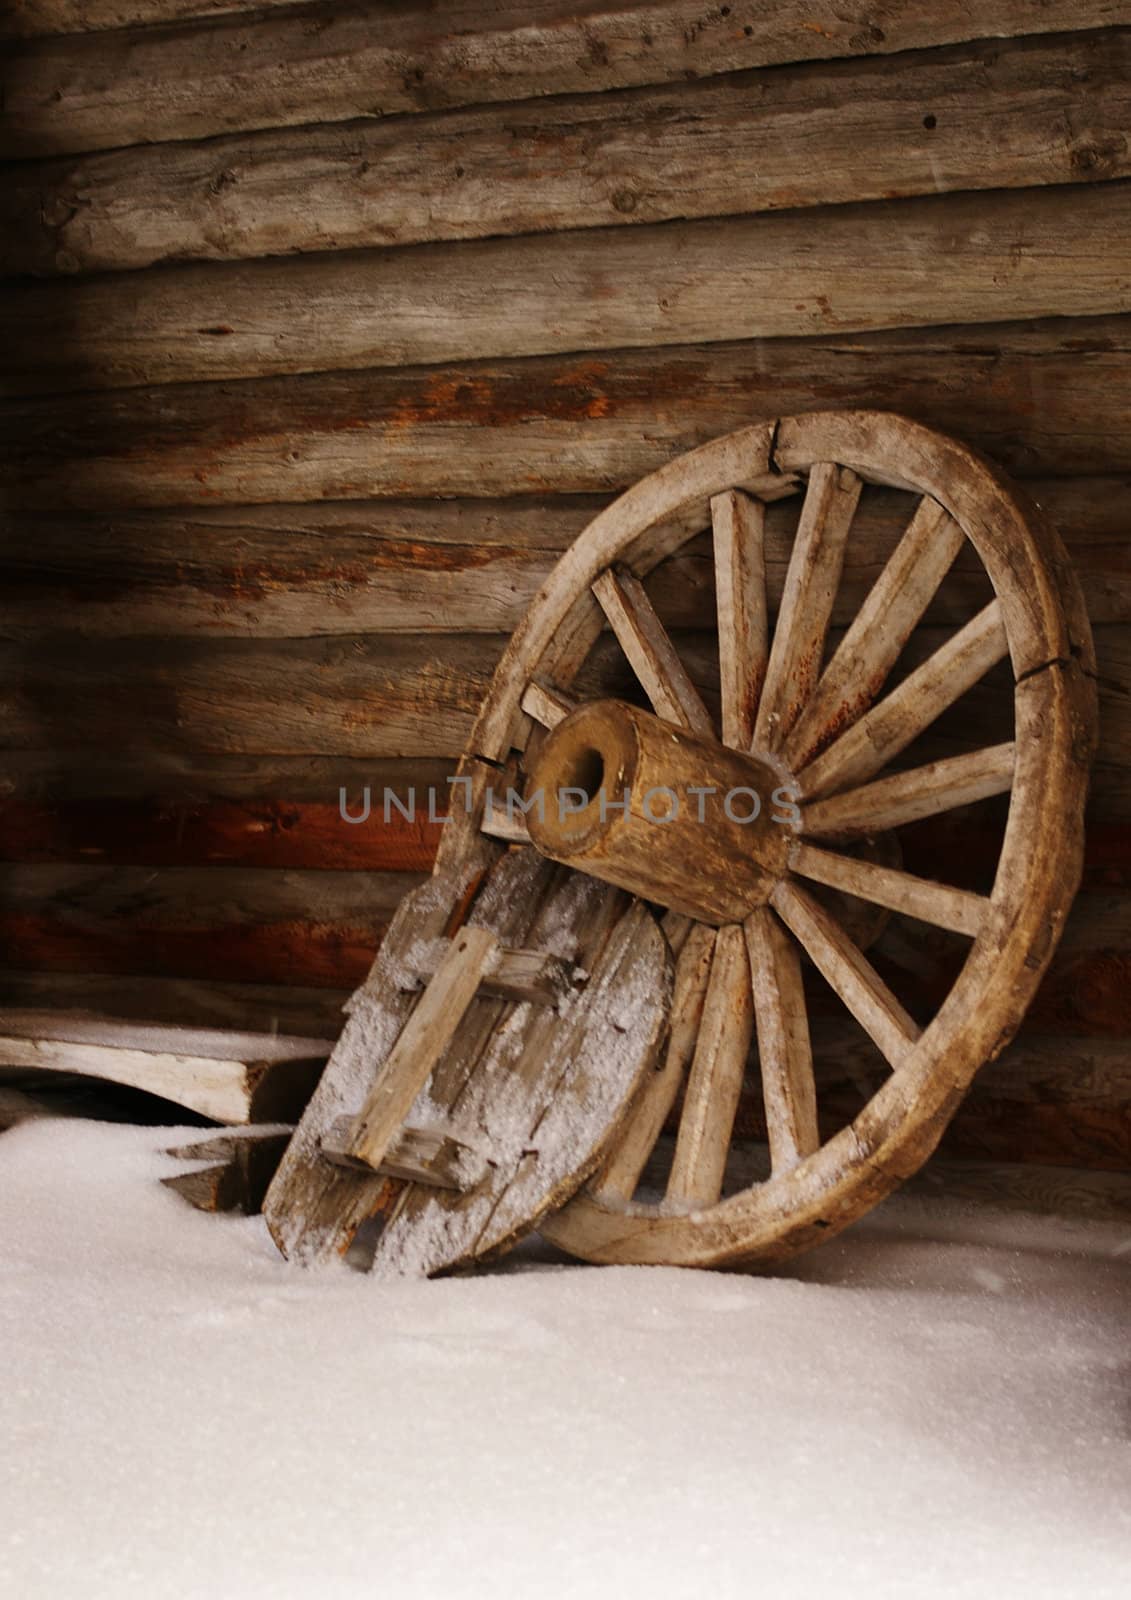 Wheel of cart by palomnik